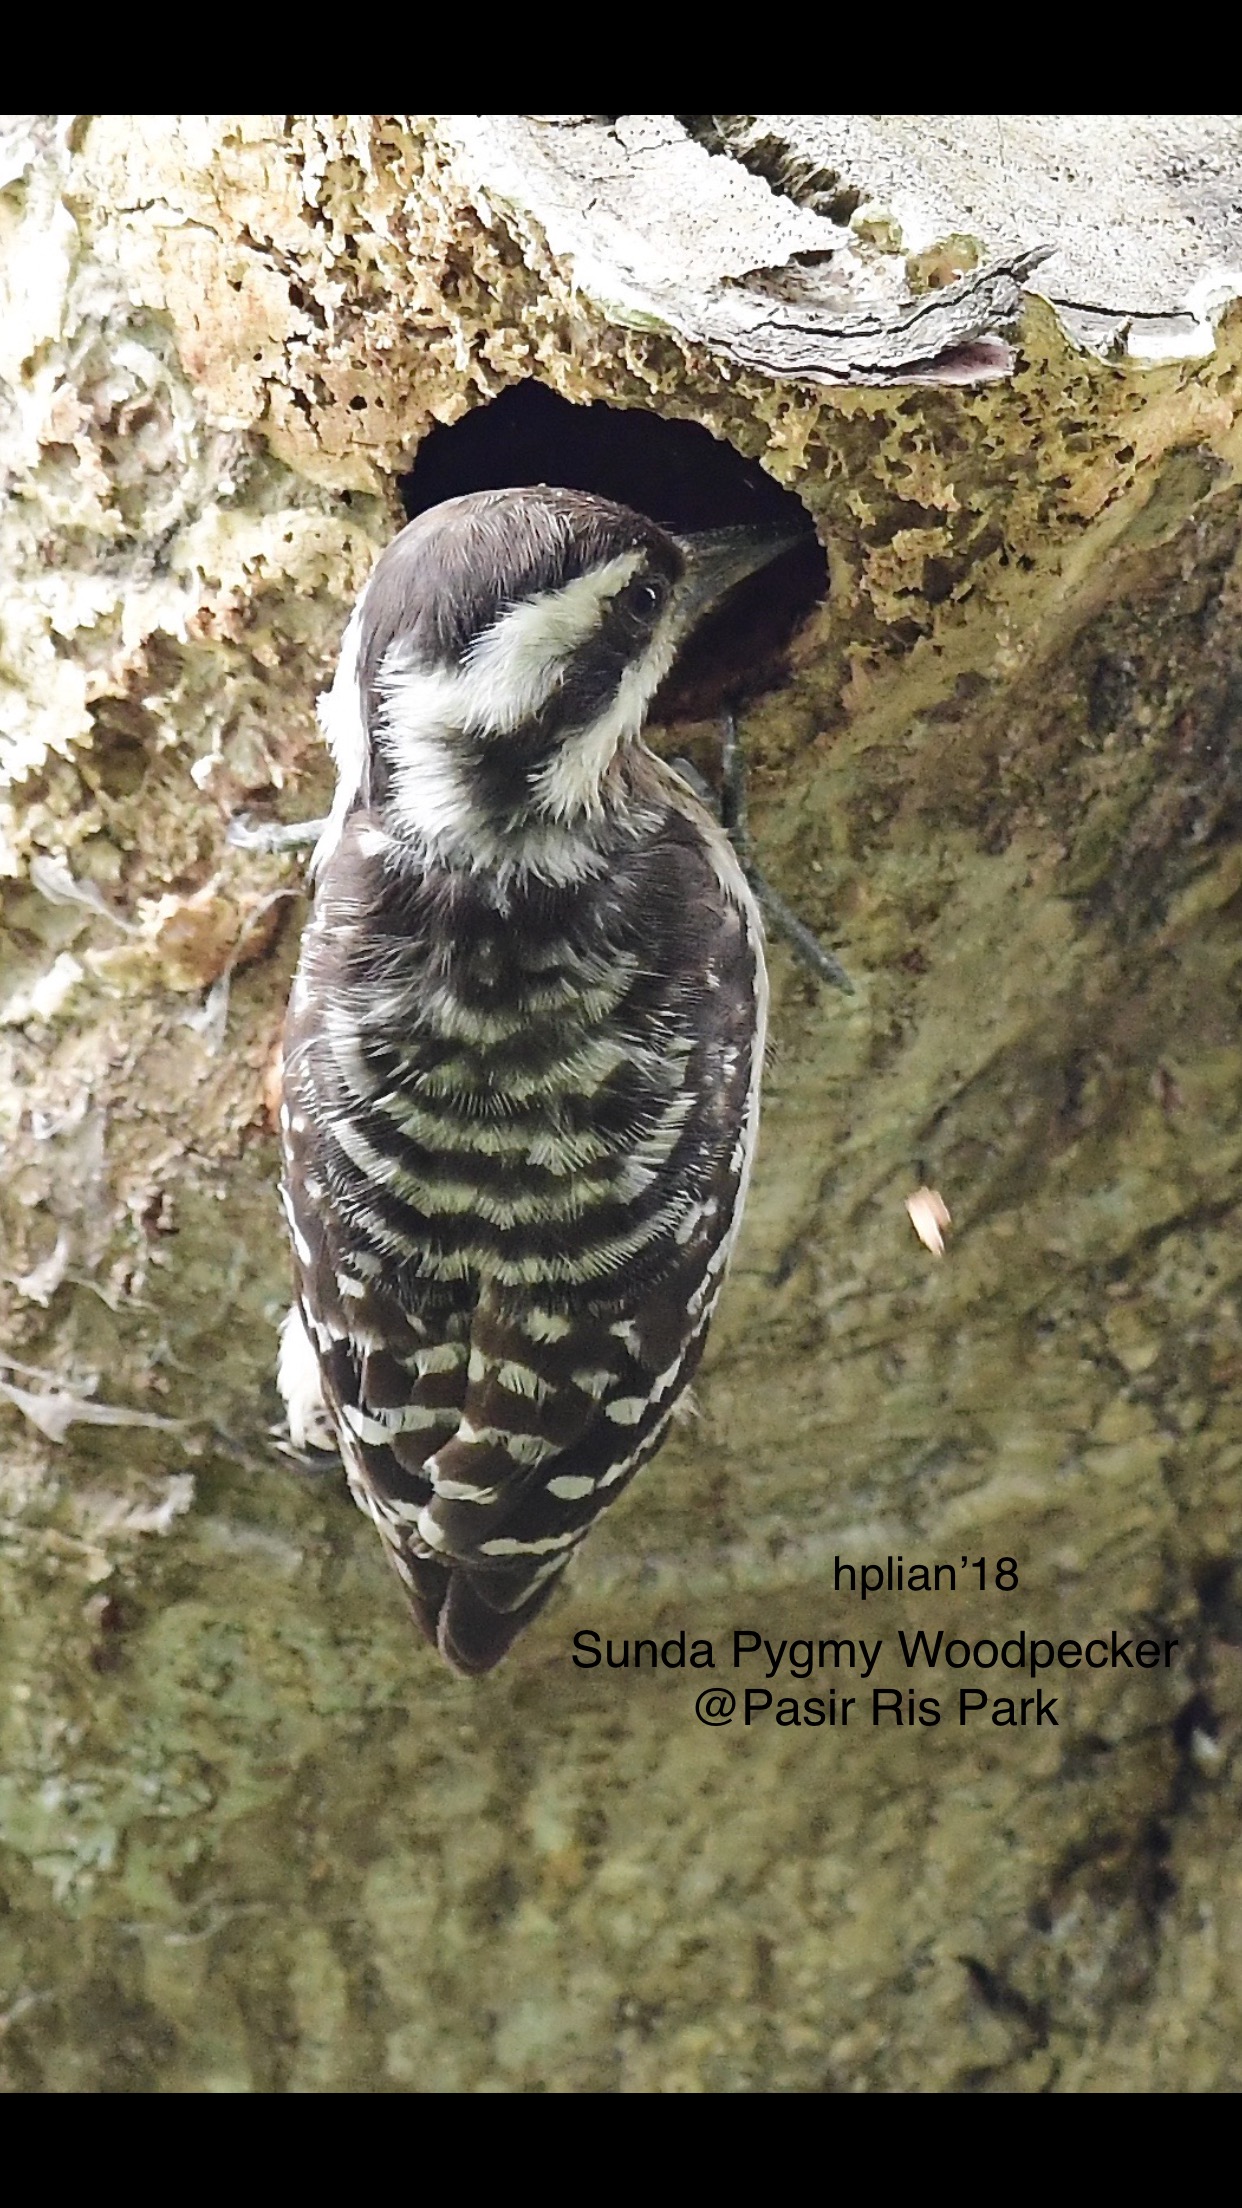 Sunda pygmy woodpecker